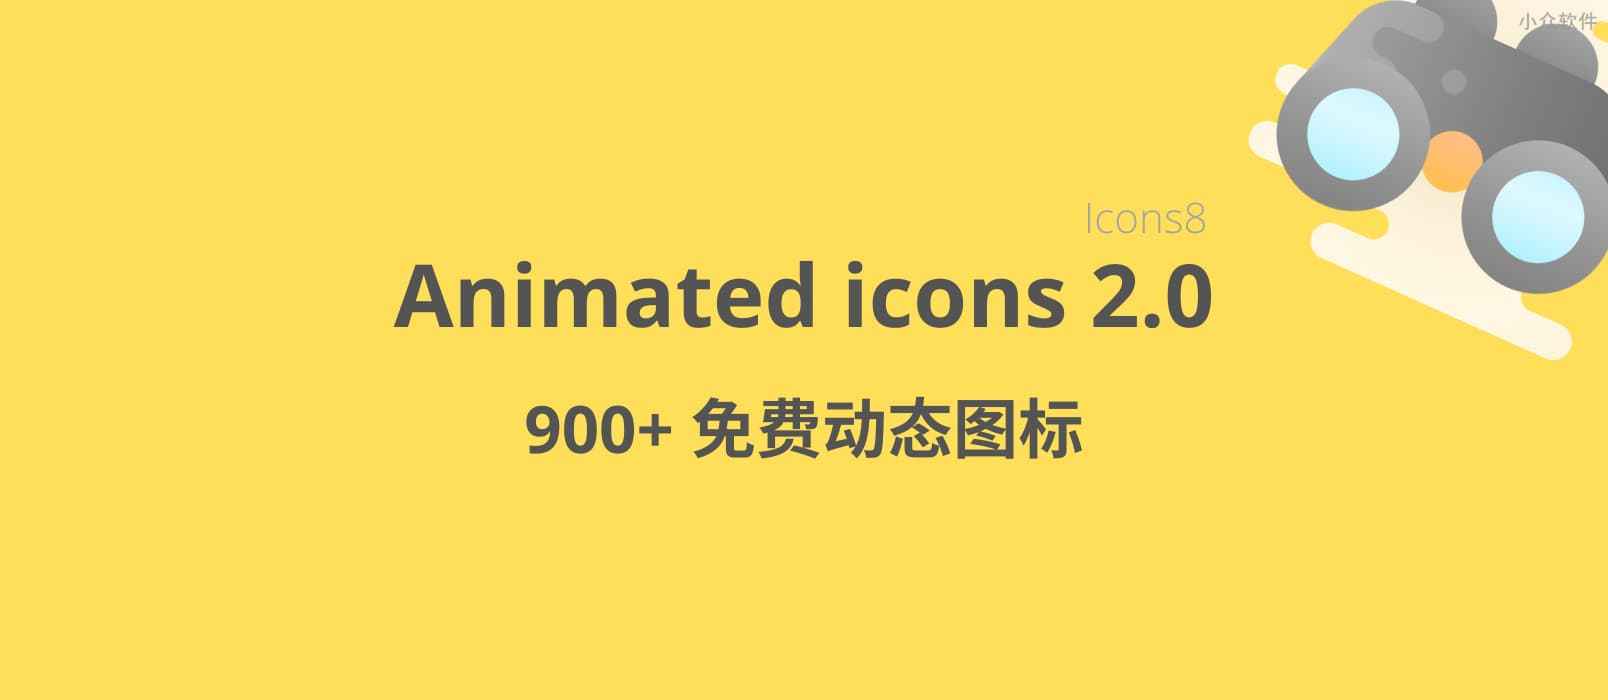 Icons8 发布 Animated icons 2.0，900+ 会动的图标，免费可商用